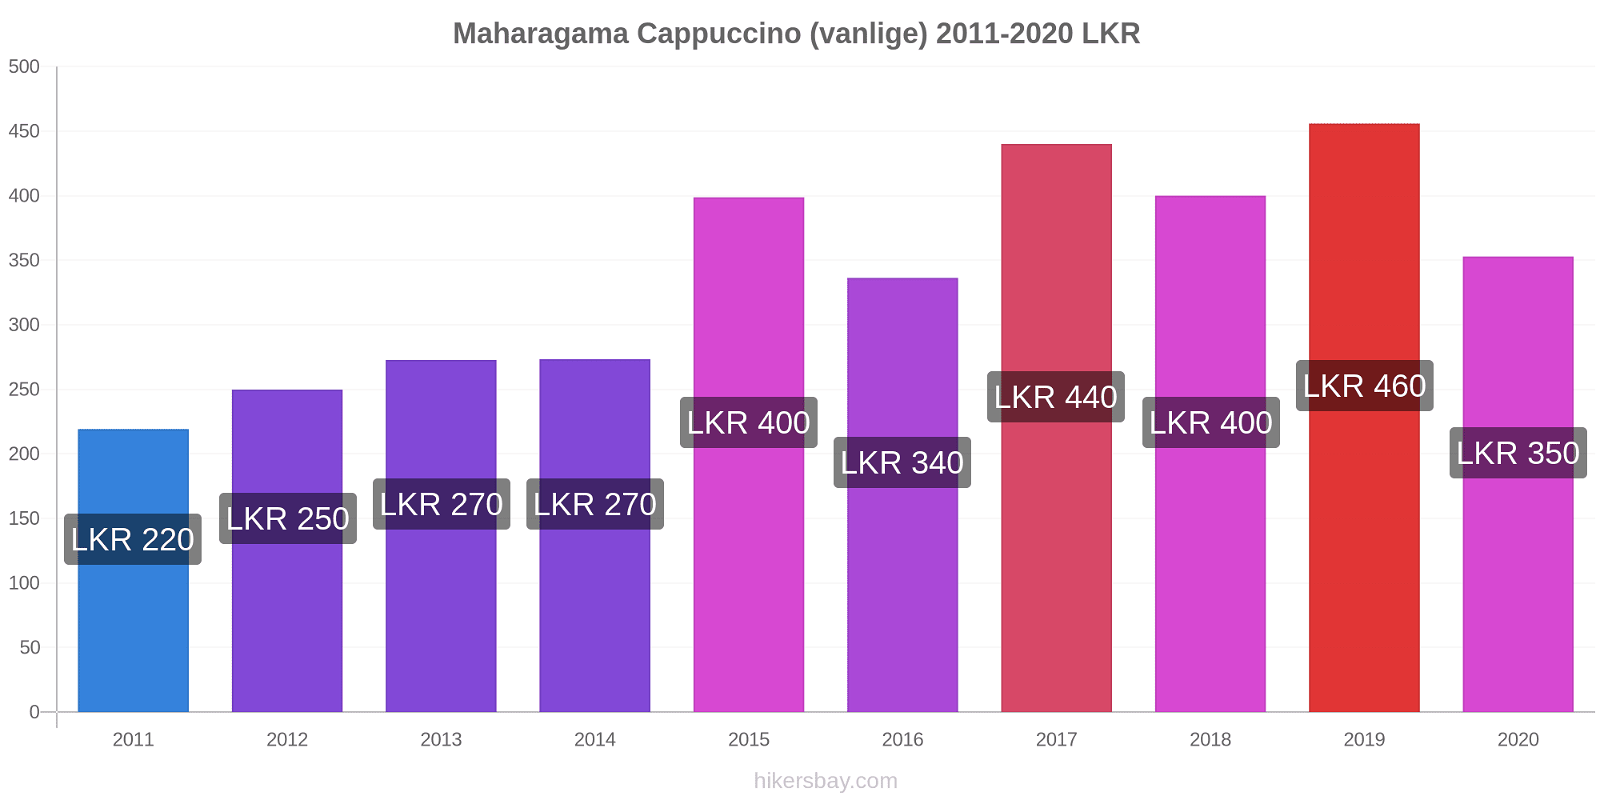 Maharagama prisendringer Cappuccino (vanlige) hikersbay.com